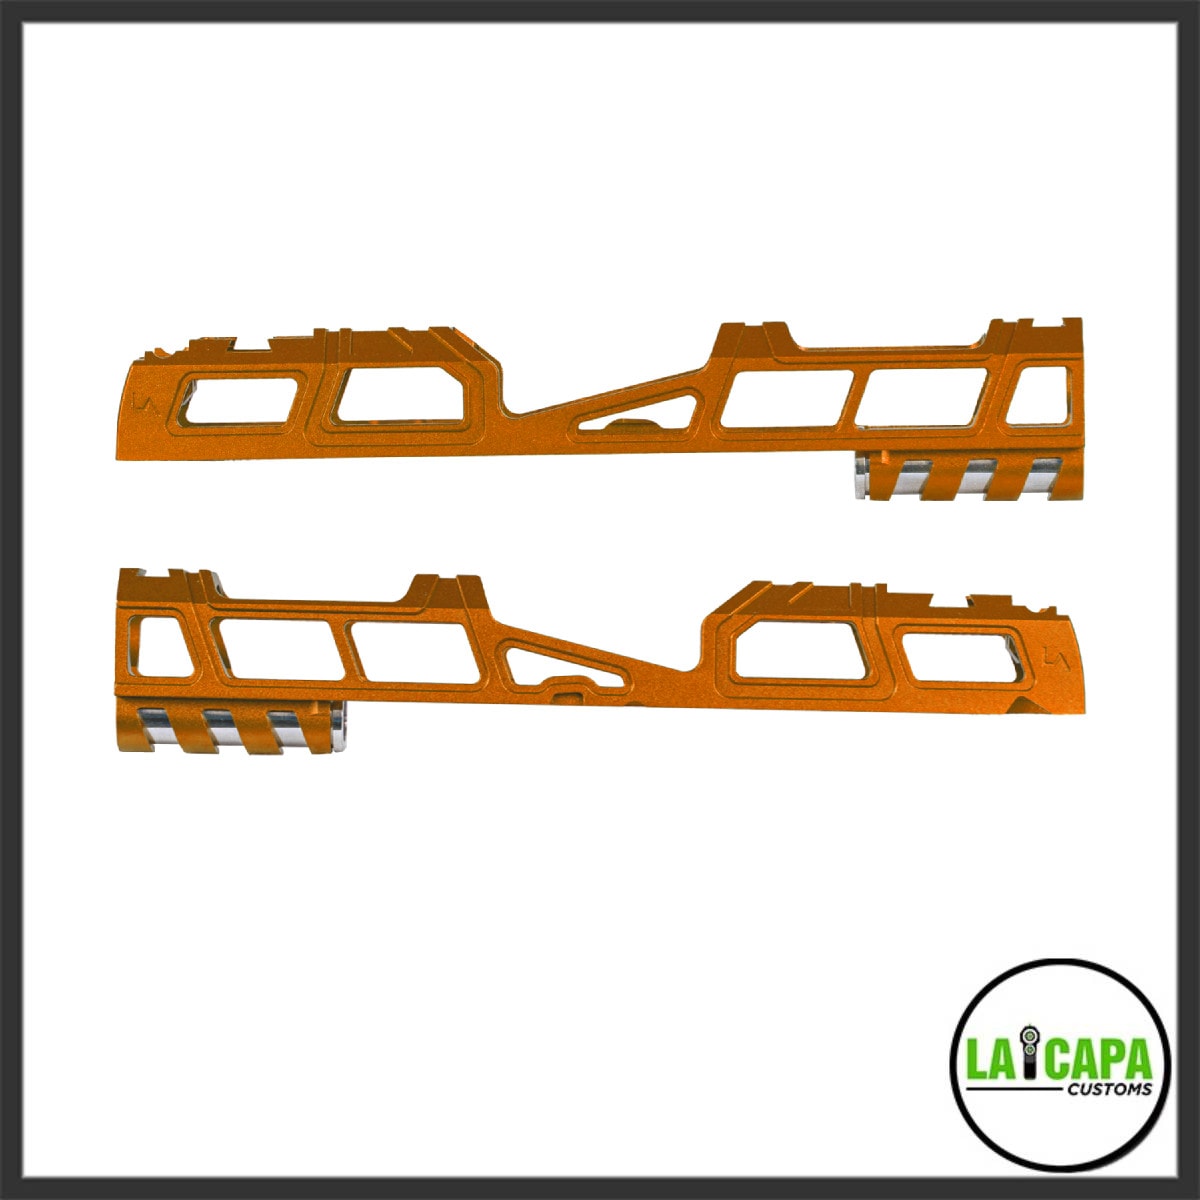 LA Capa Customs 5.1 “Hyper” Aluminum Slide - Orange